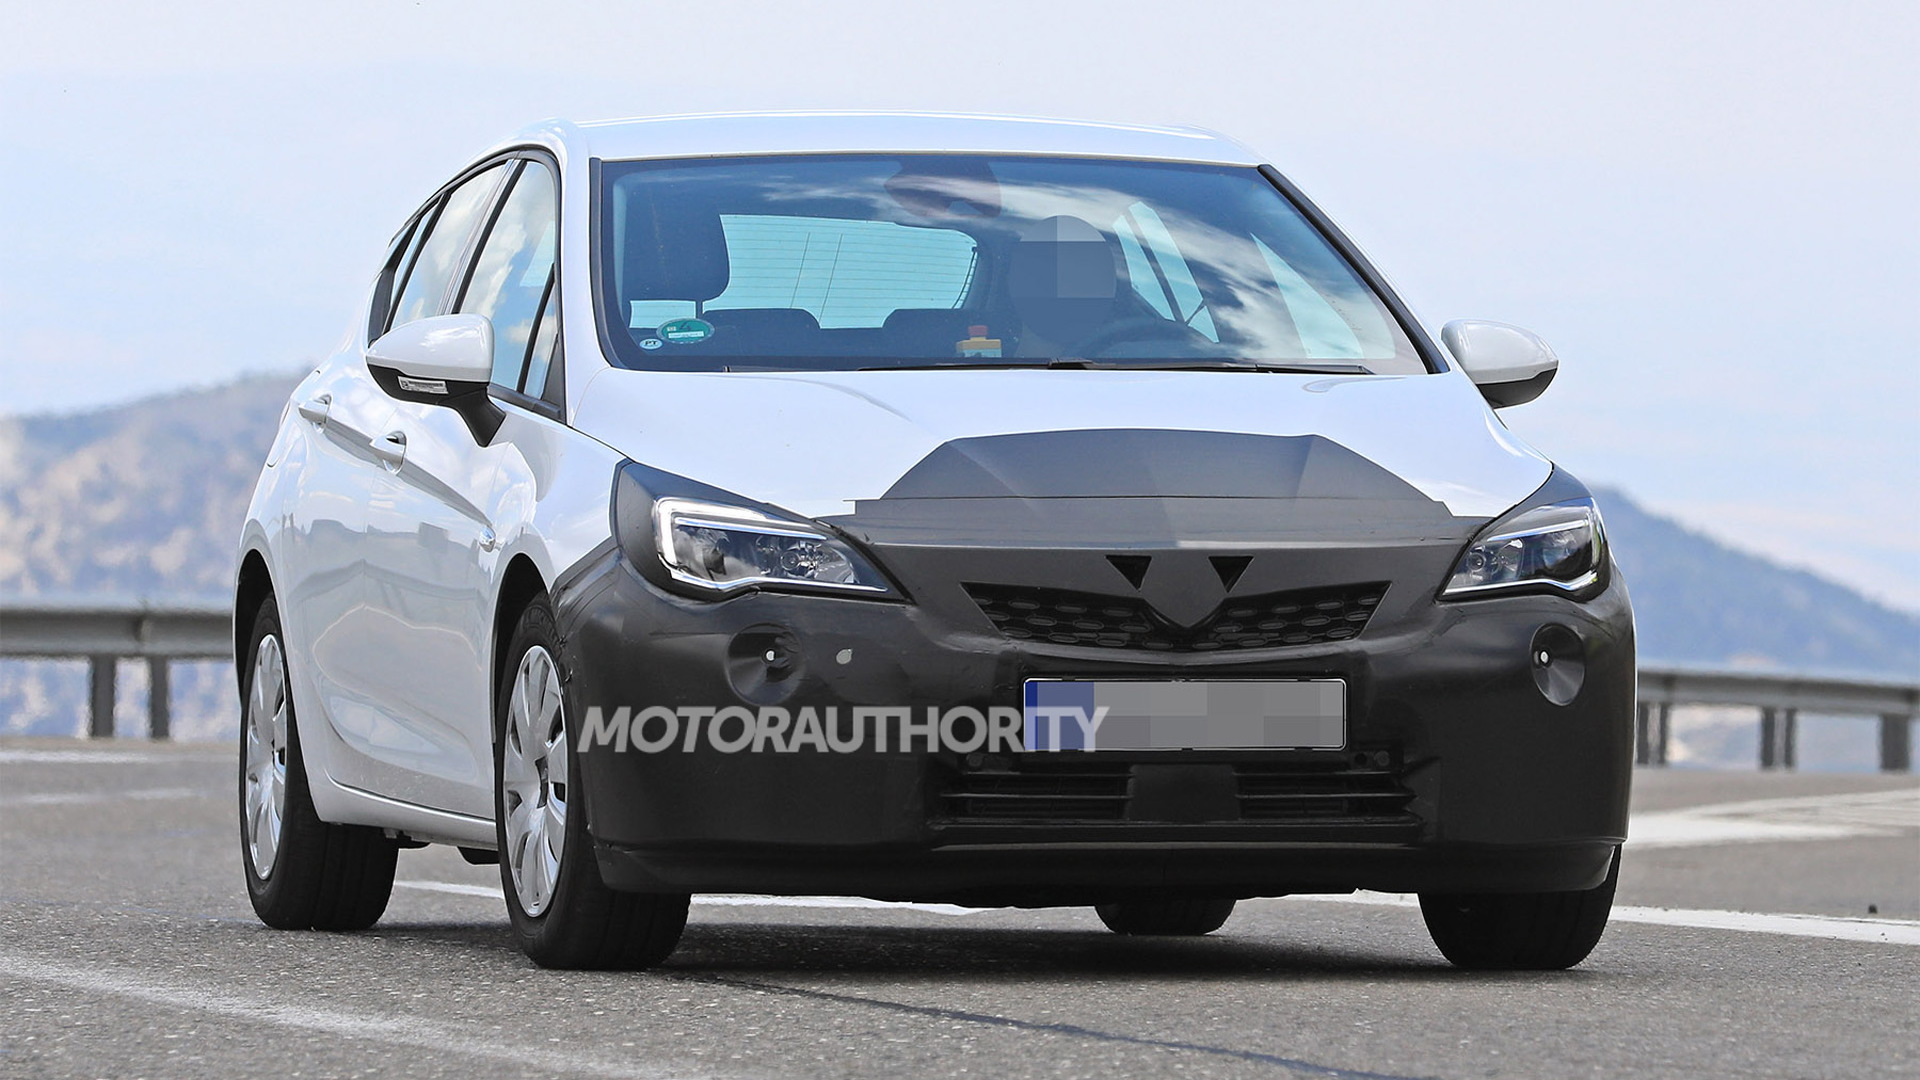 2019 Opel Astra facelift spy shots - Image via S. Baldauf/SB-Medien